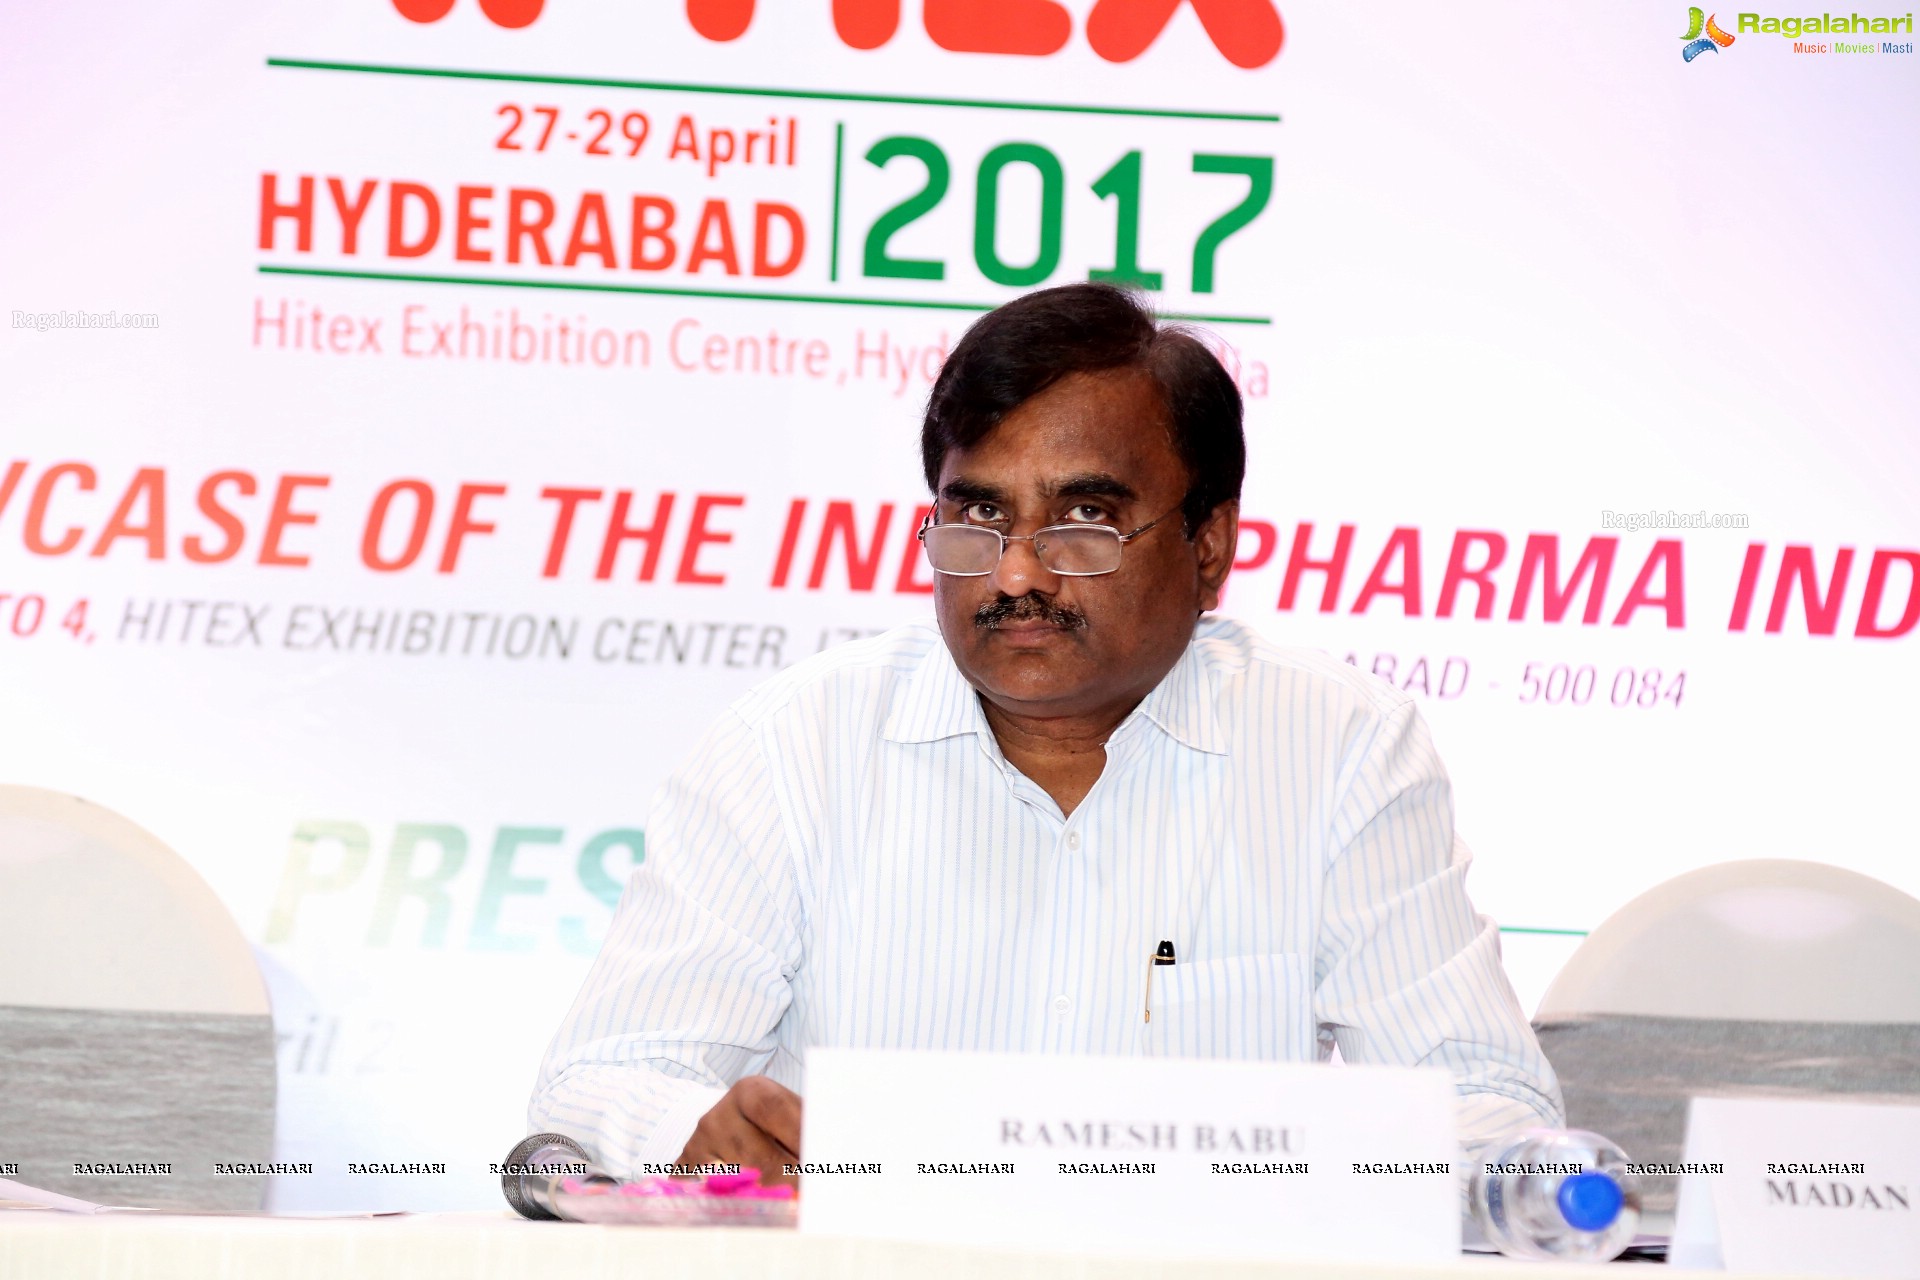 Hyderabad hosts Mega Pharma Show - IPHEX 2017